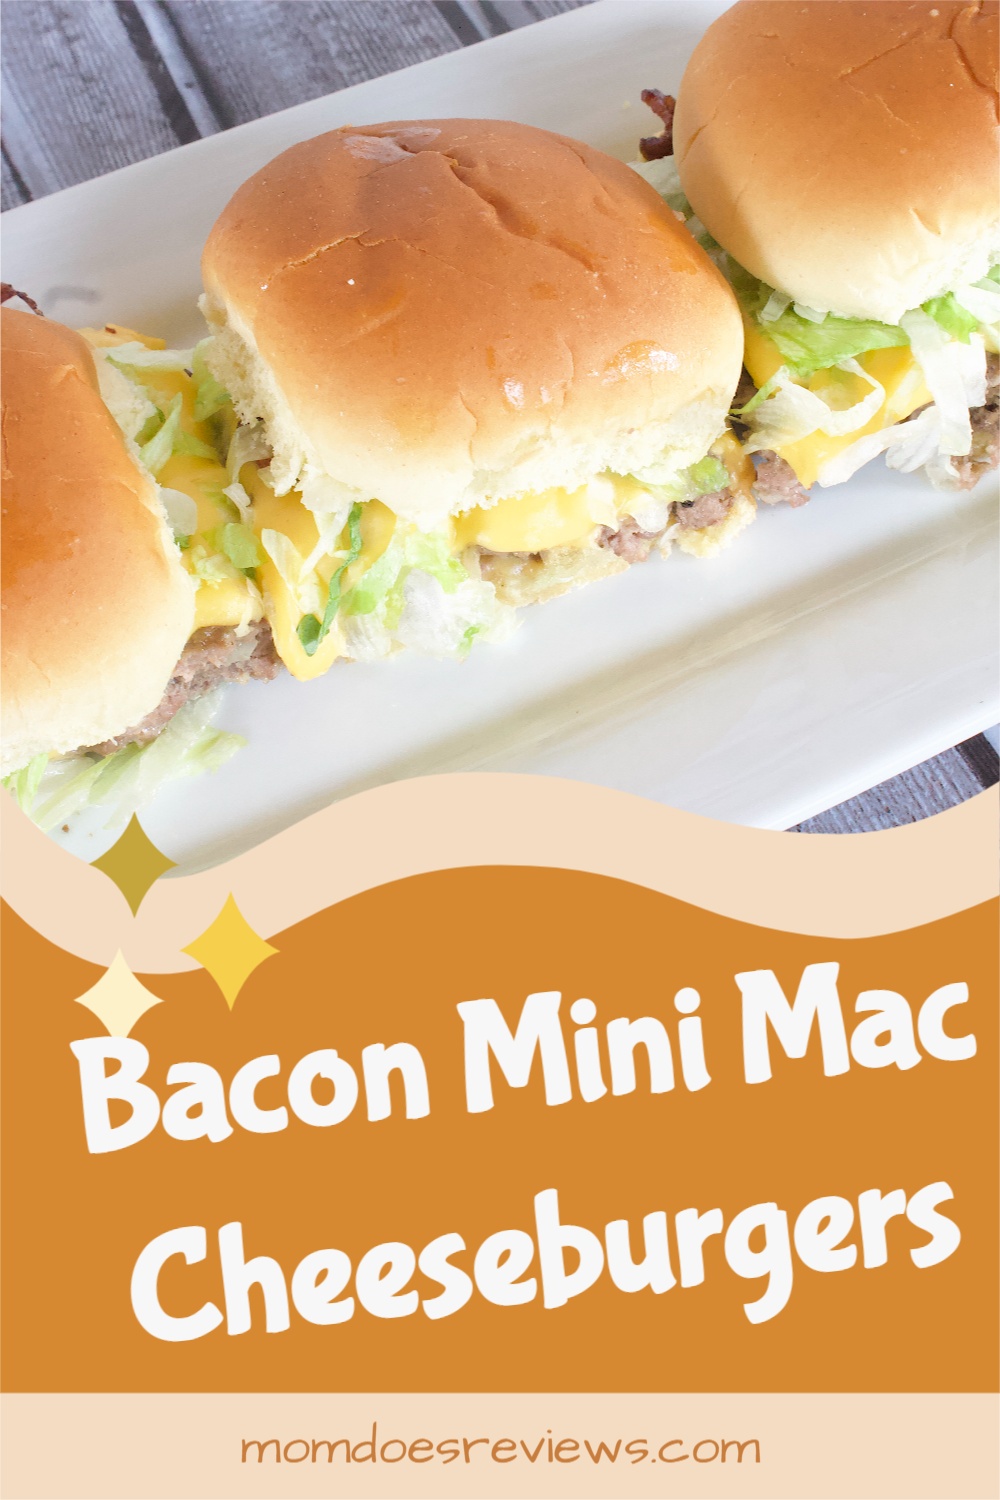 Bacon Mini Mac Cheeseburgers